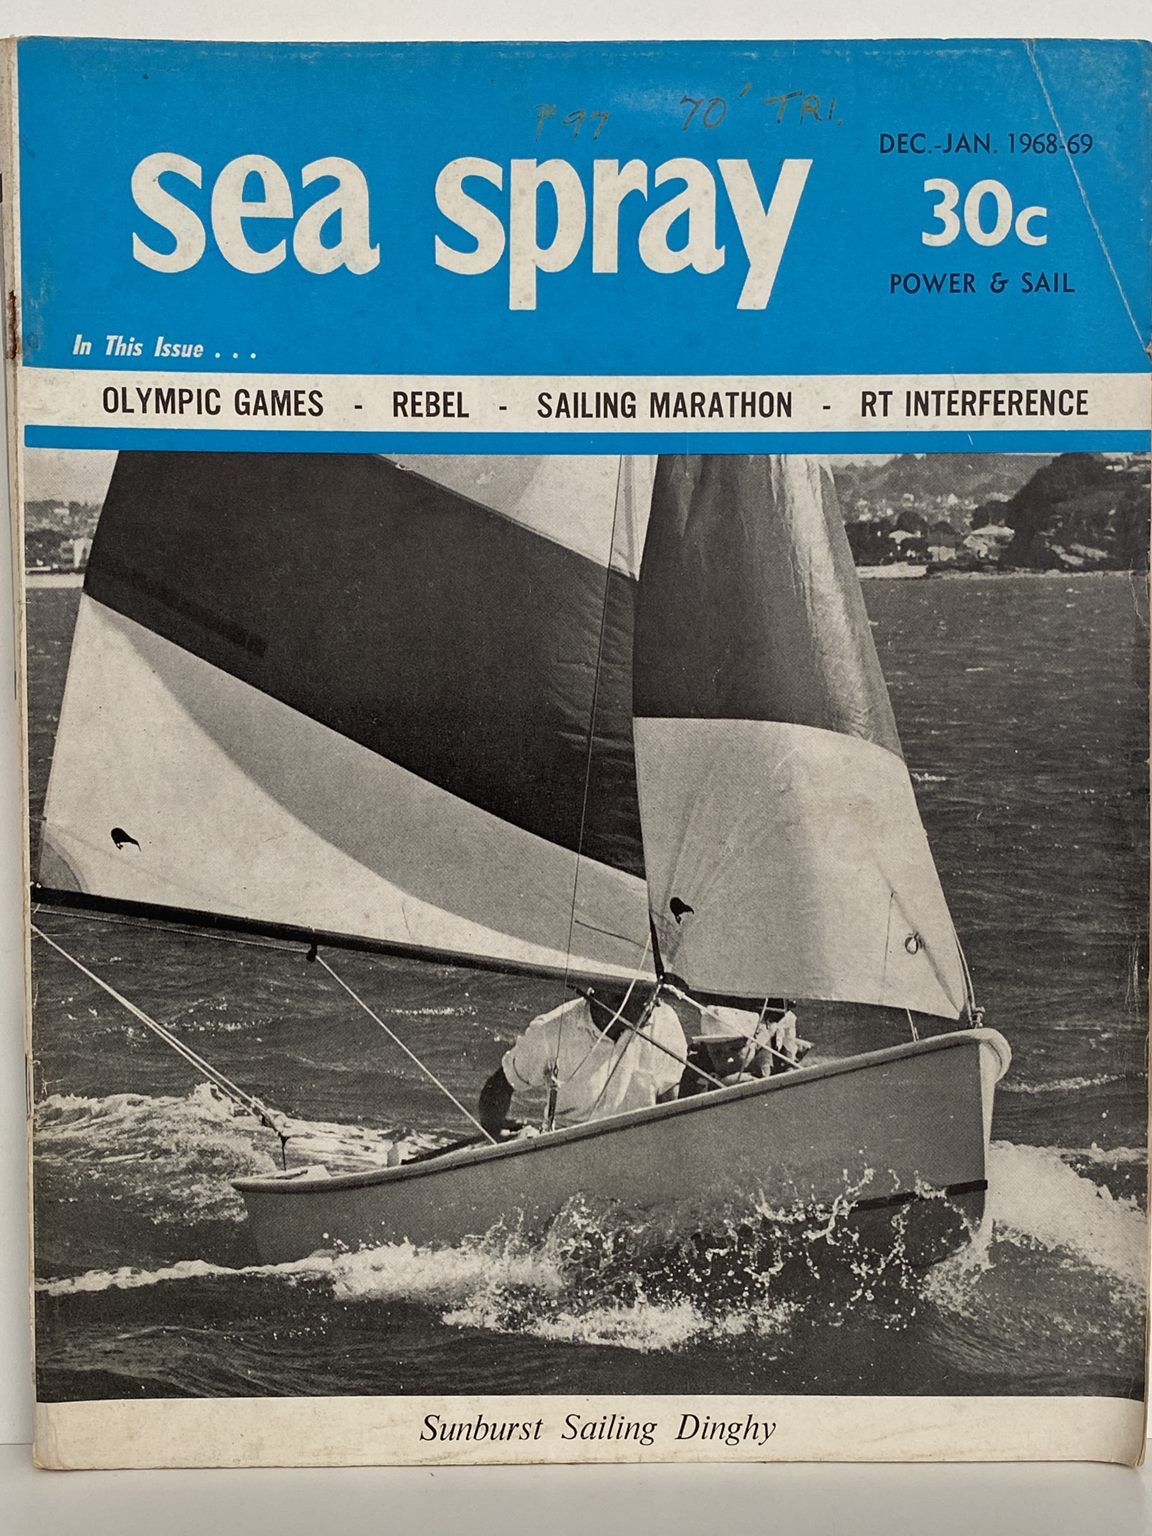 VINTAGE MAGAZINE: Sea Spray / Power & Sail Vol. 23, No. 11 - Dec 1968 / Jan 1969